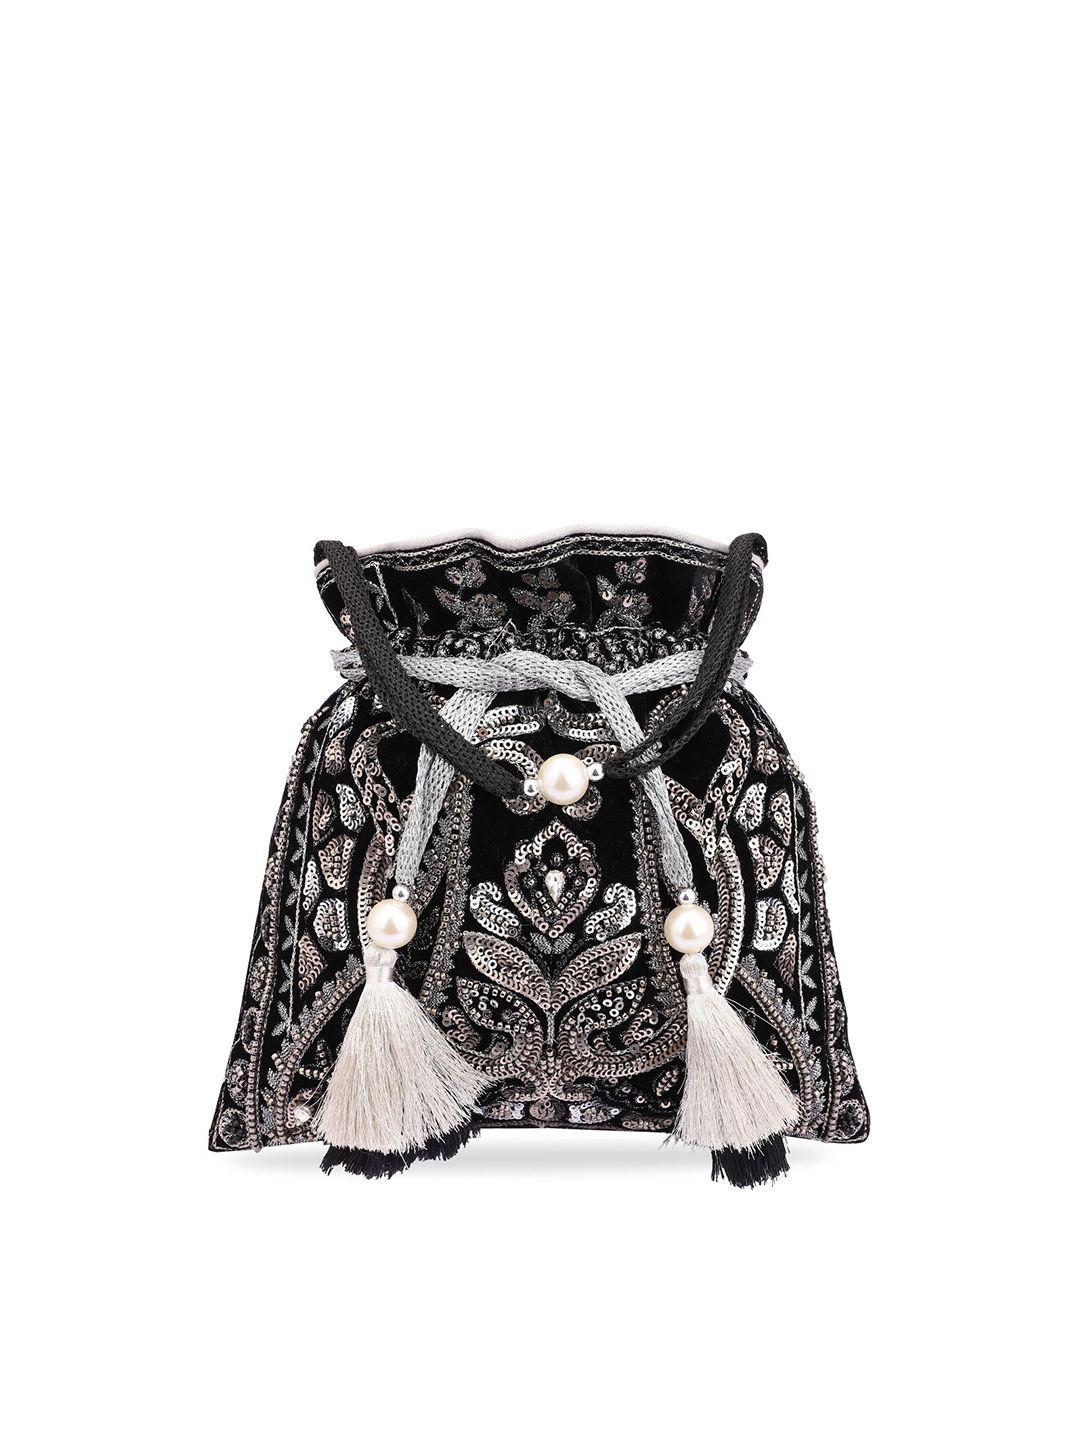 masq black & silver-toned embellished potli clutch